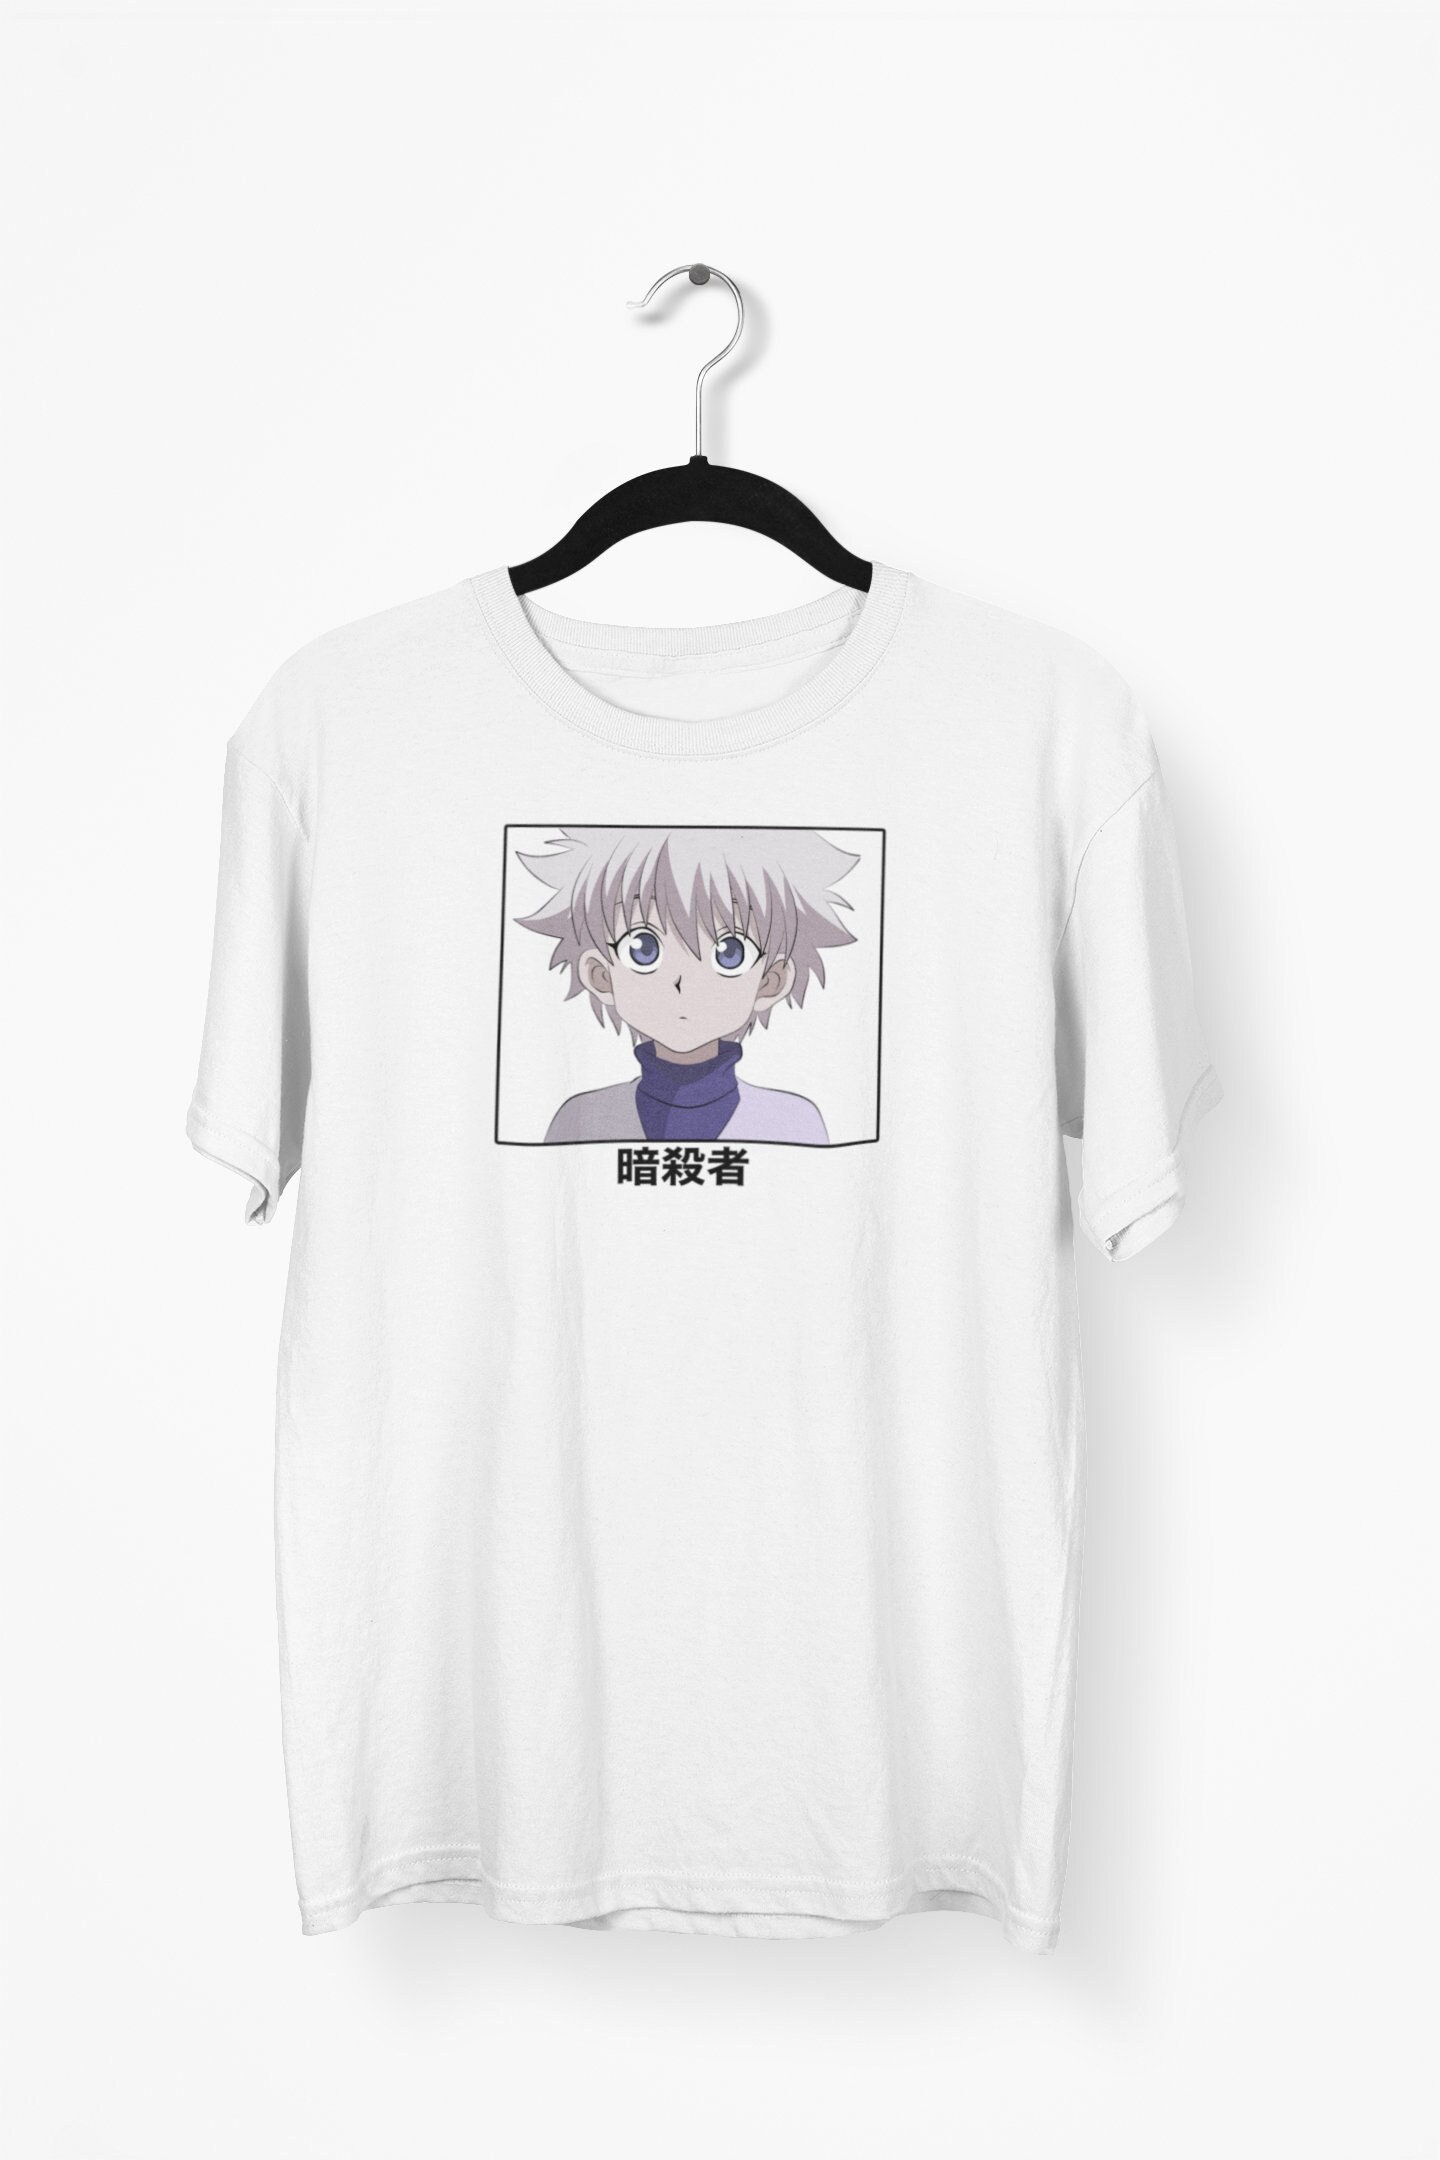 Hunter x Hunter Shirt Killua Shirt Best Anime Gift Cool Anime T-Shirt HxH Hunter x Hunter Killua Cold Eyes Unisex Anime T-Shirt